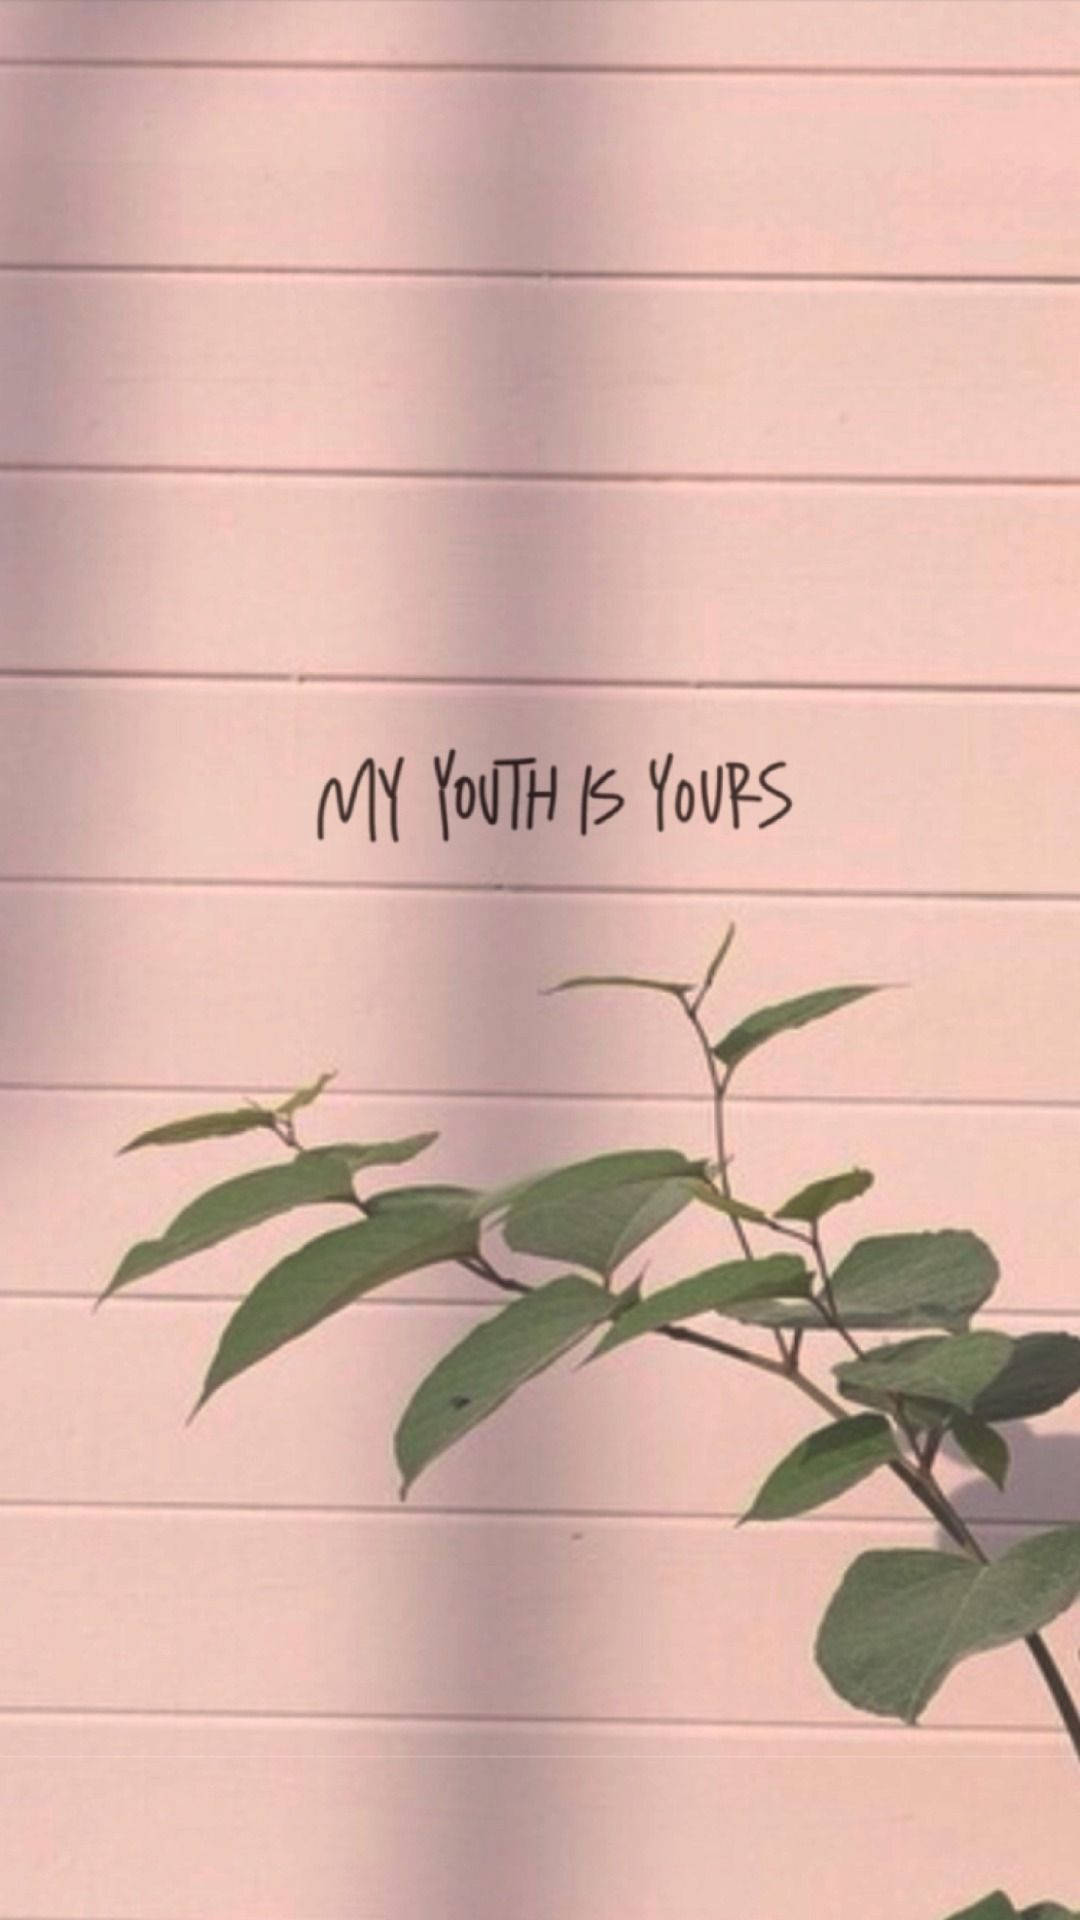 Youth Lyrics On Wall Tumblr Aesthetic